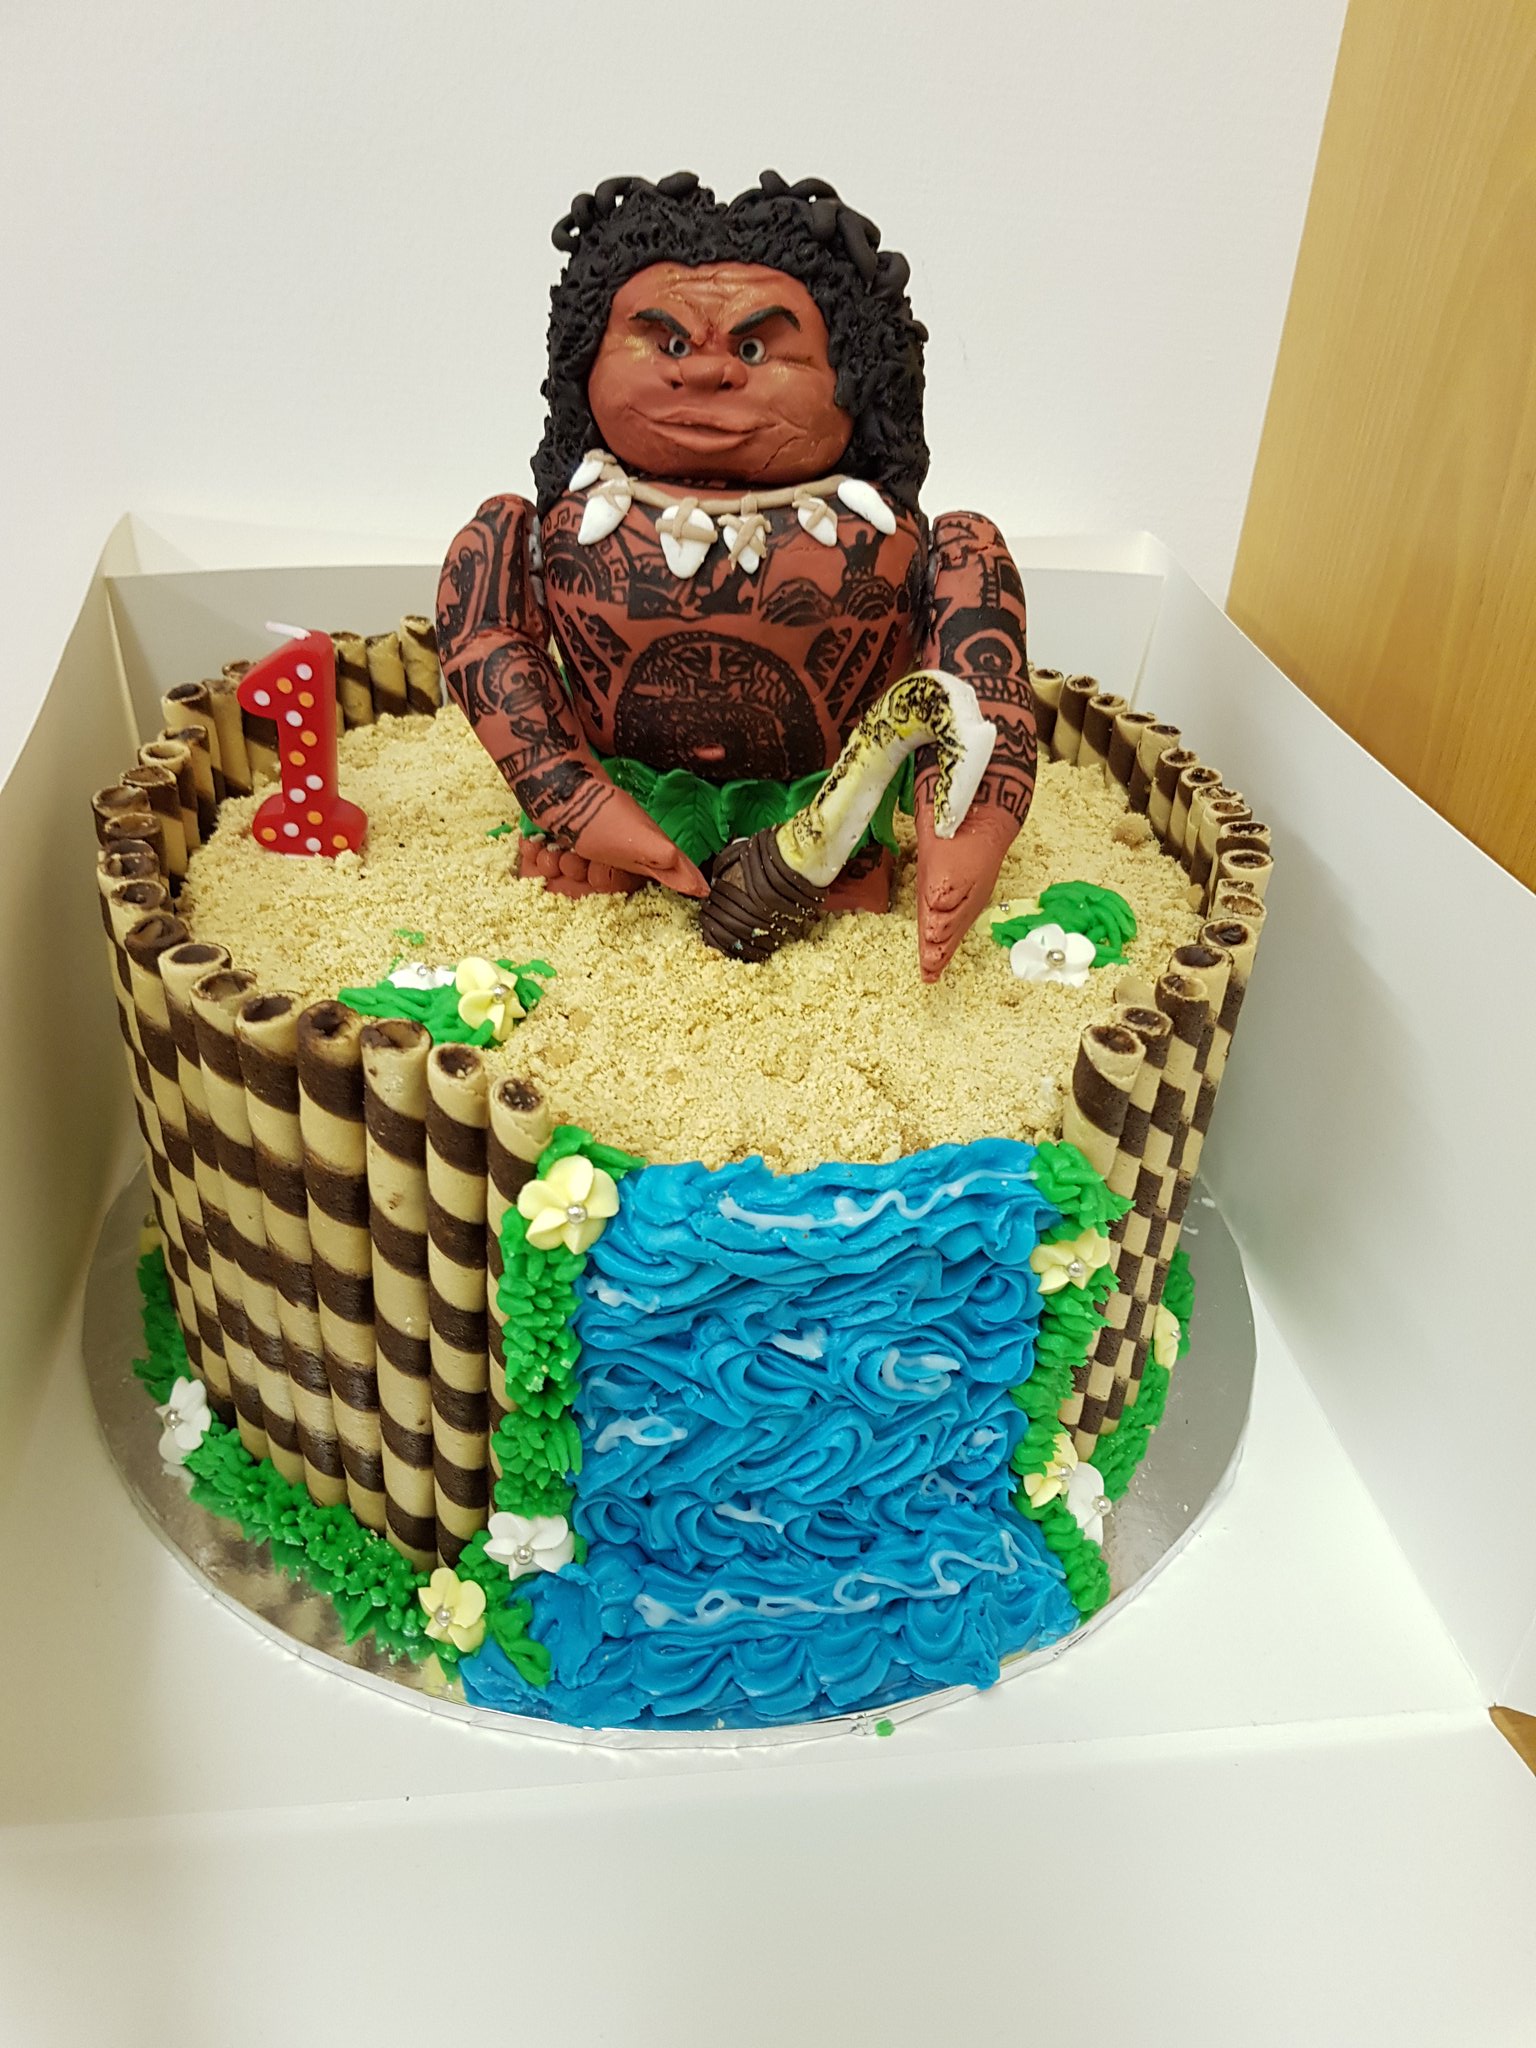 ❤ on X: My handmade Maui cake for my grandsons 1st birthday ❤ *original  cake design credit given to cake maker found on the internet * #moanacake  #handmadefigure #cake #1stbirthday #myboy  /